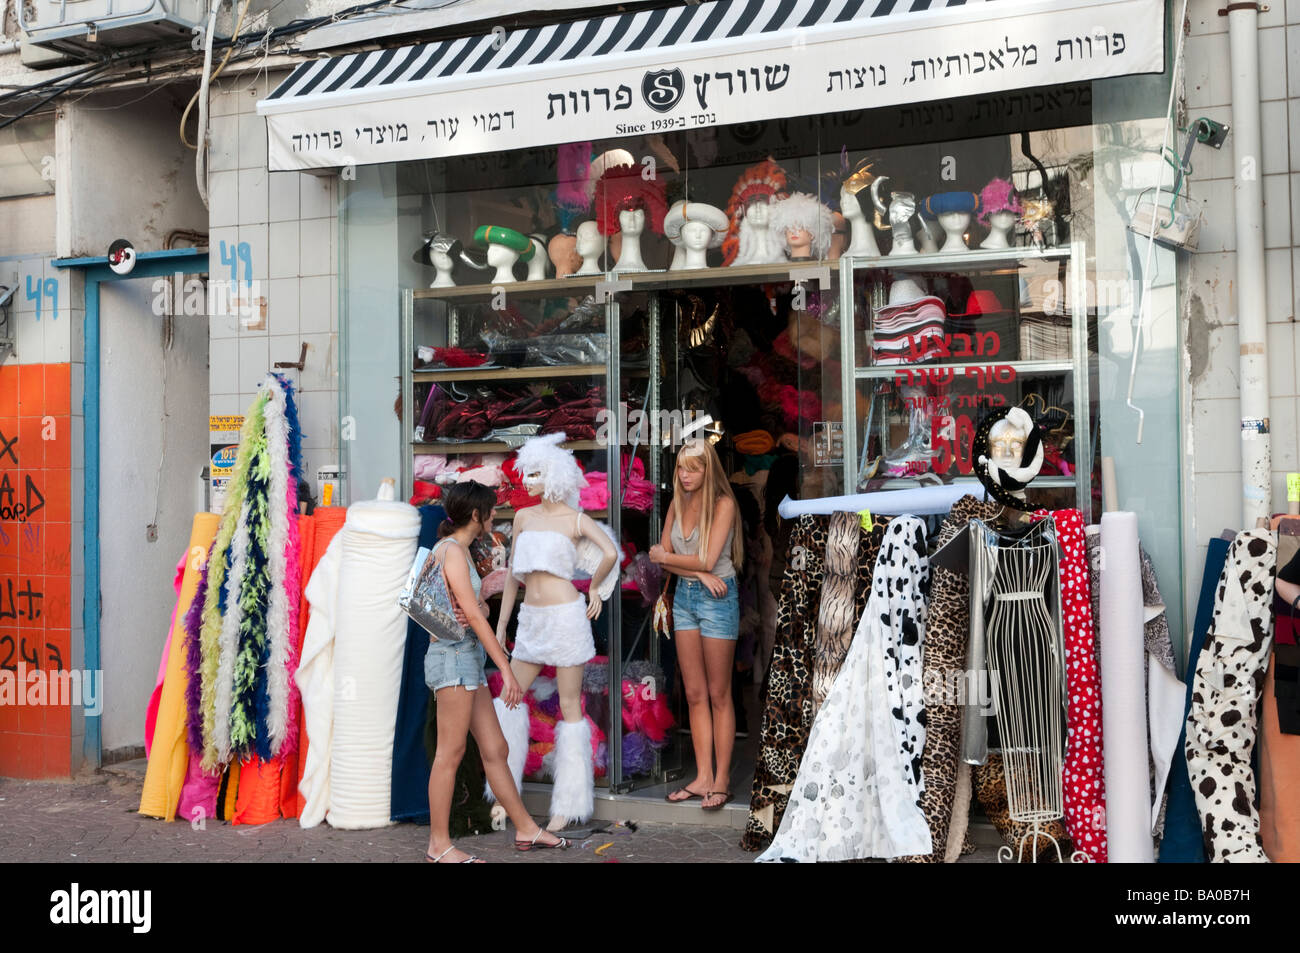 Aviv-Yafo geile junge Tel frauen in Junge Frau